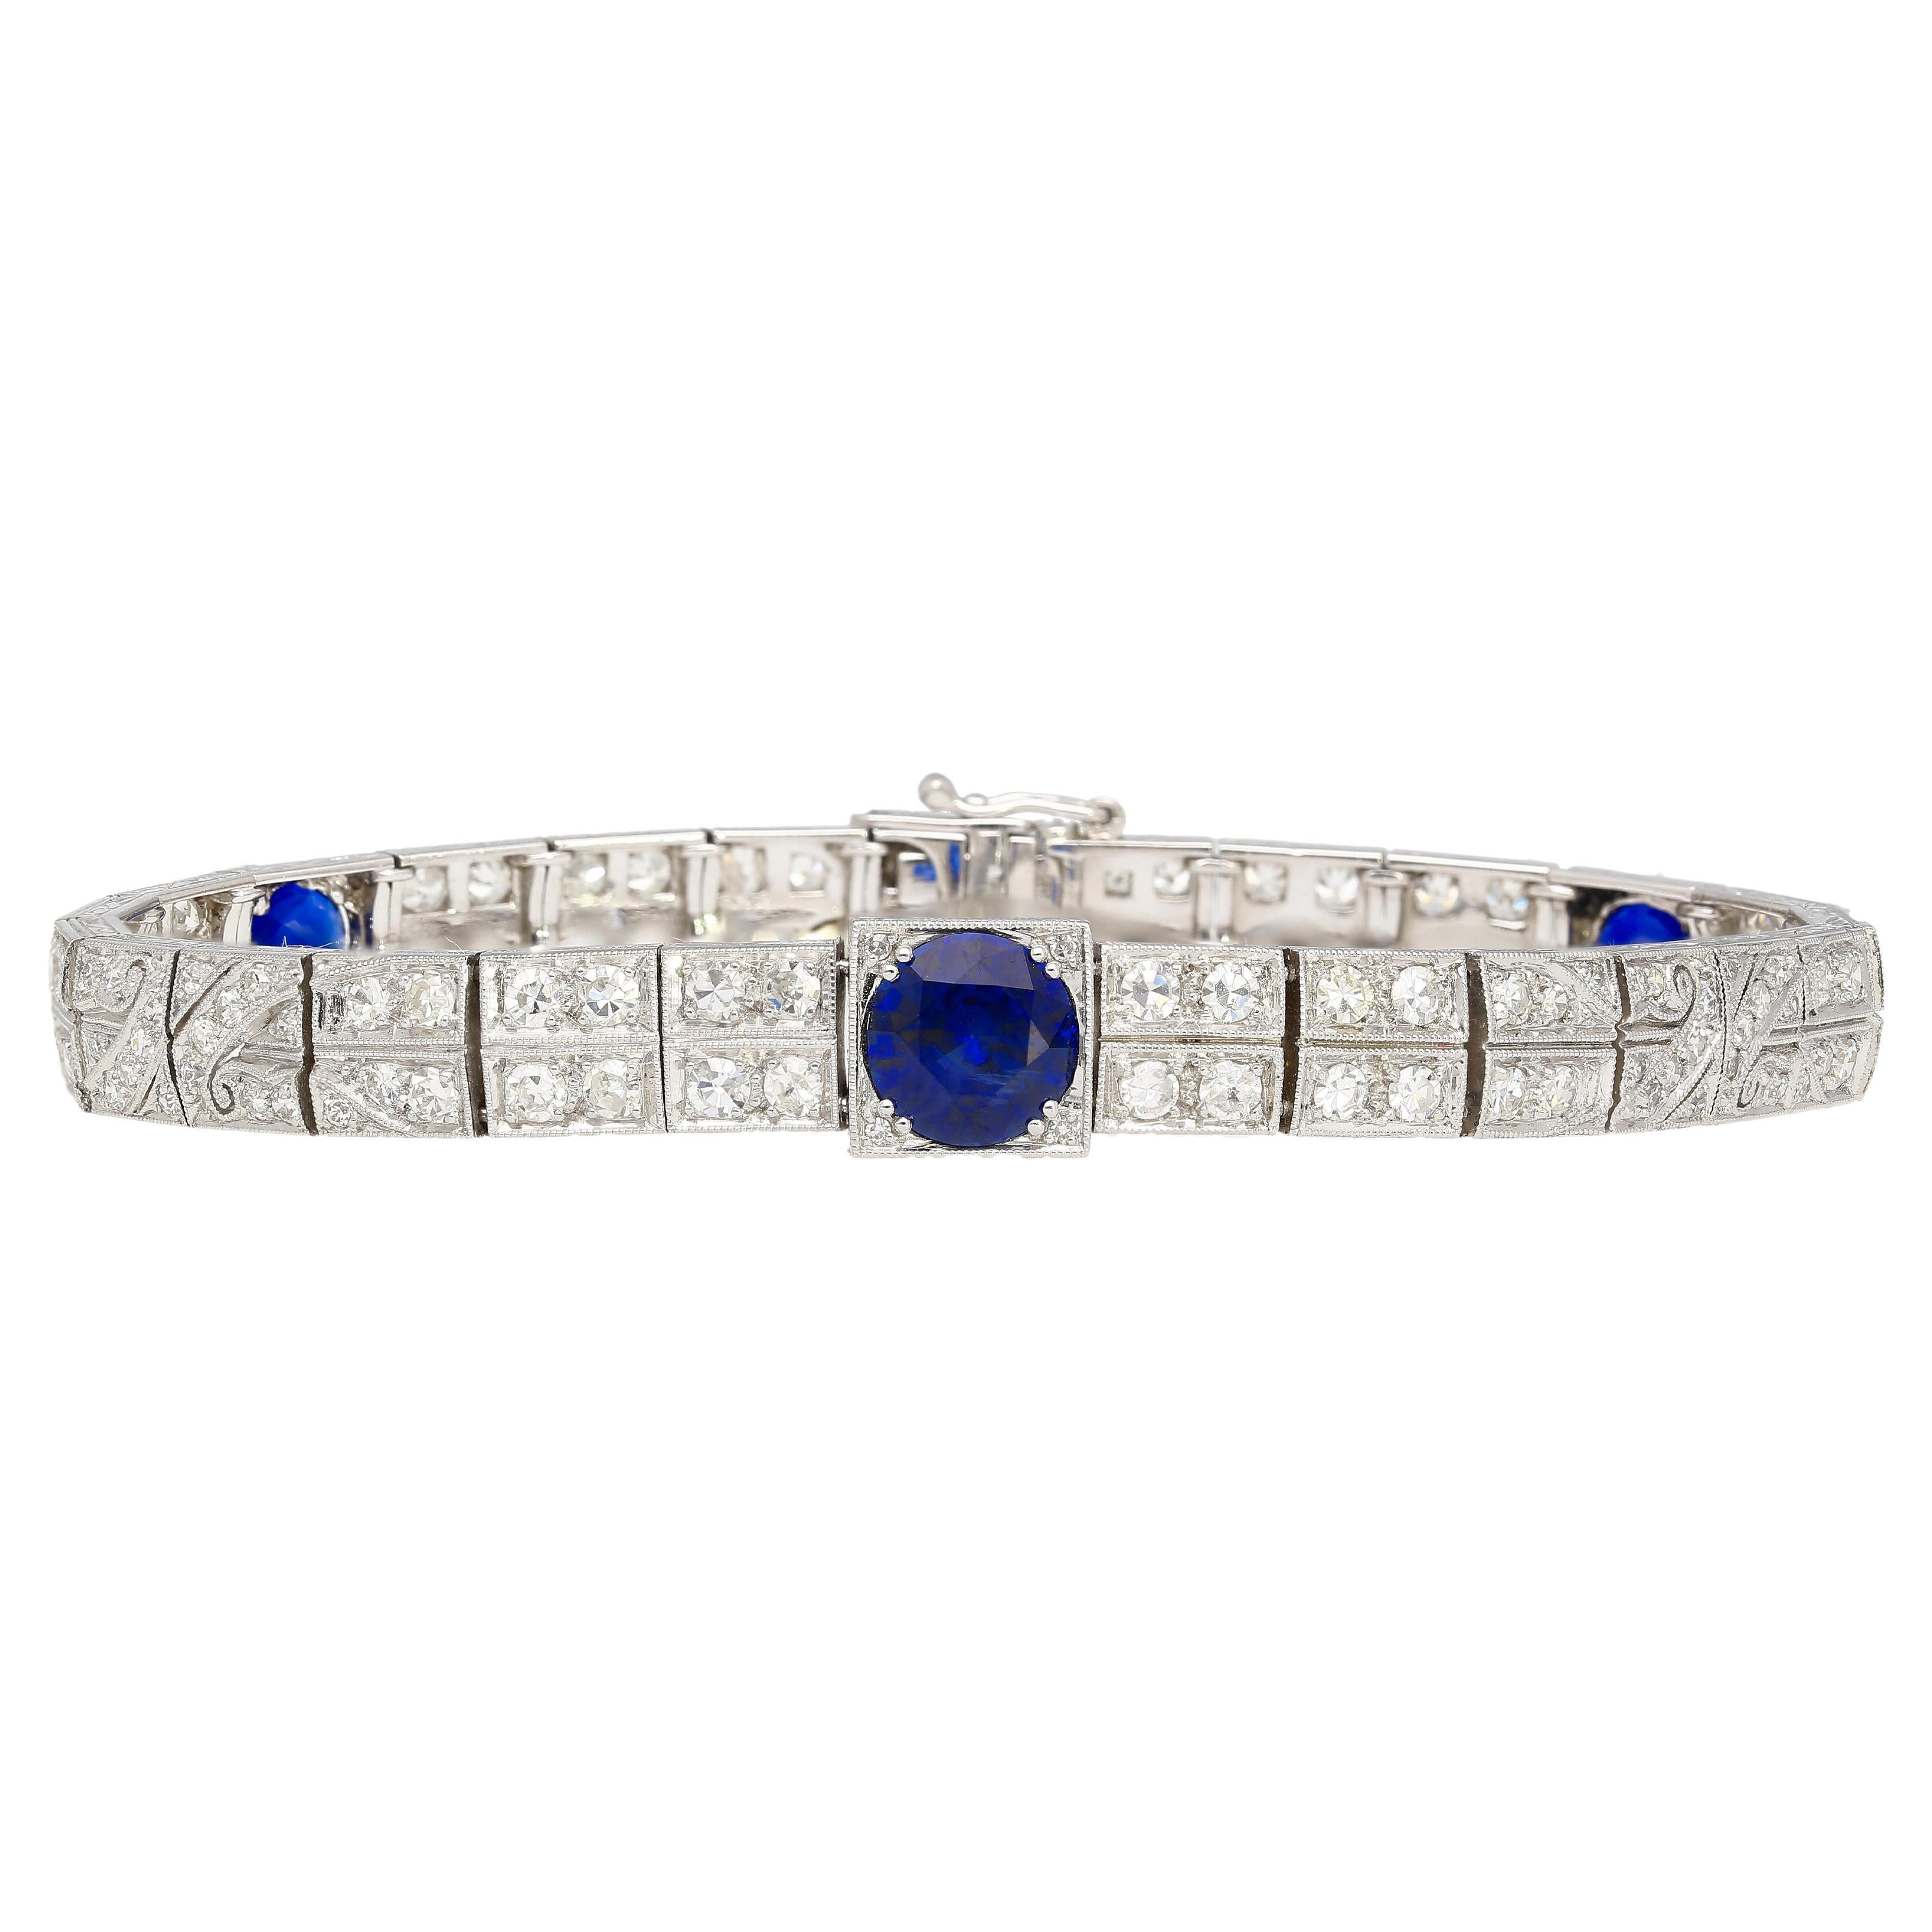 Antique Art Deco Platinum Filigree Blue Sapphire & Diamond Bracelet